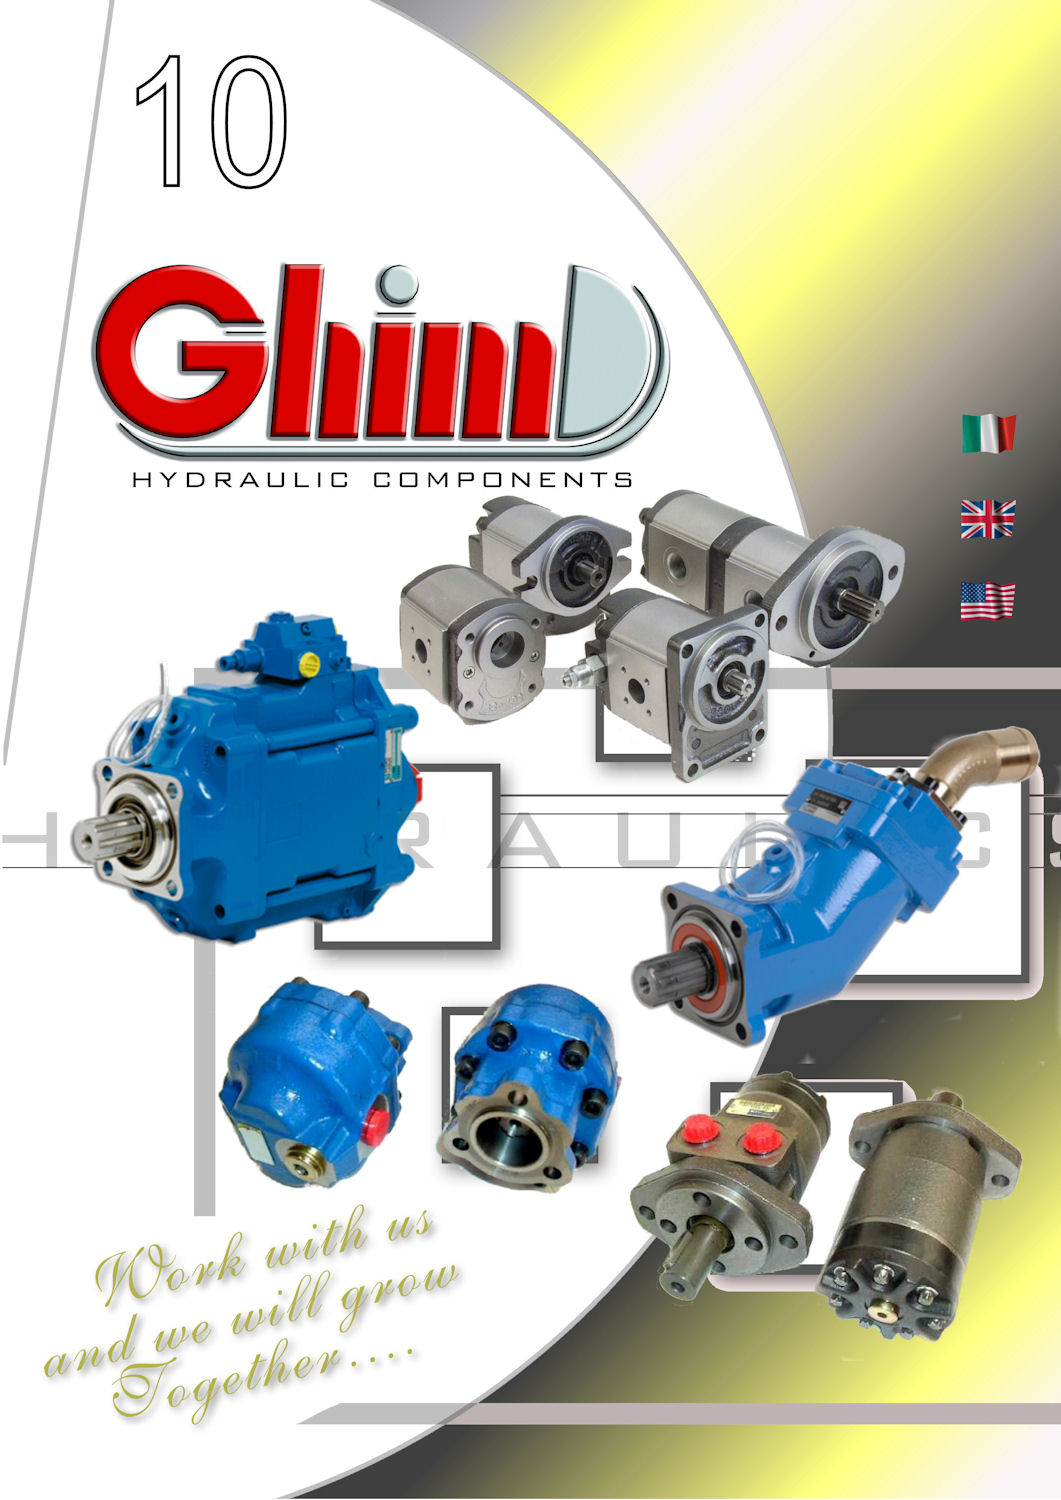 Pompe e Motori Oleodinamici - GHIM Hydraulics